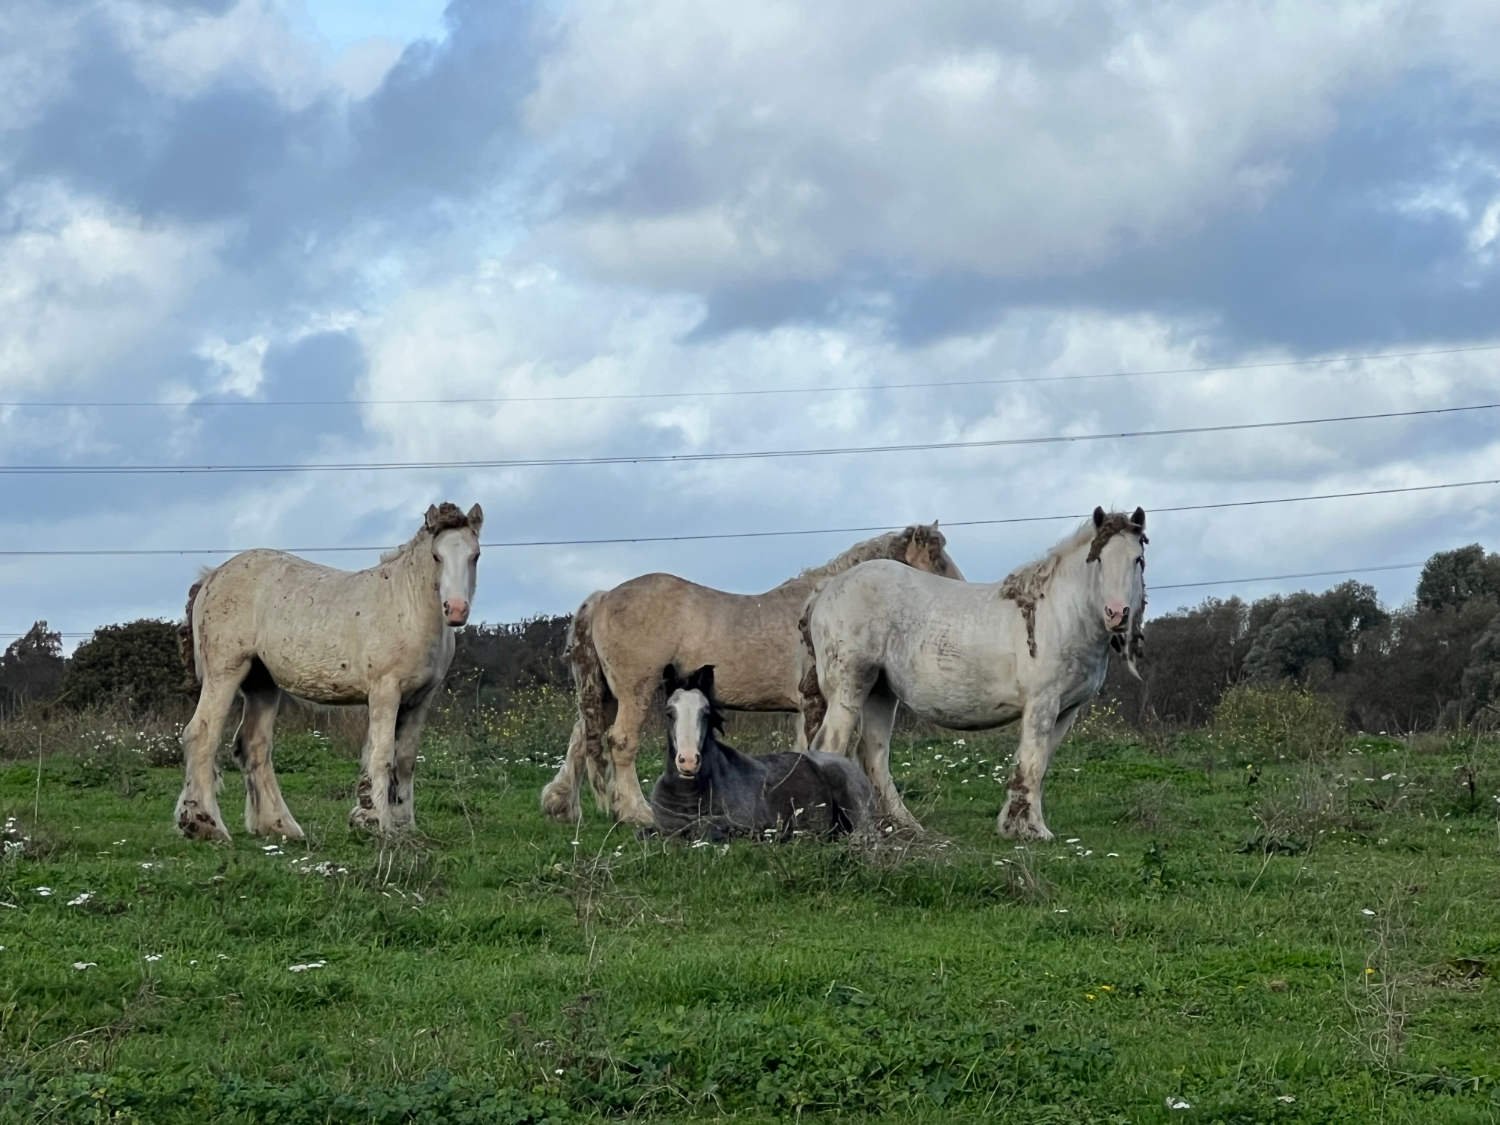 Staines Moor, where the wild horses roam